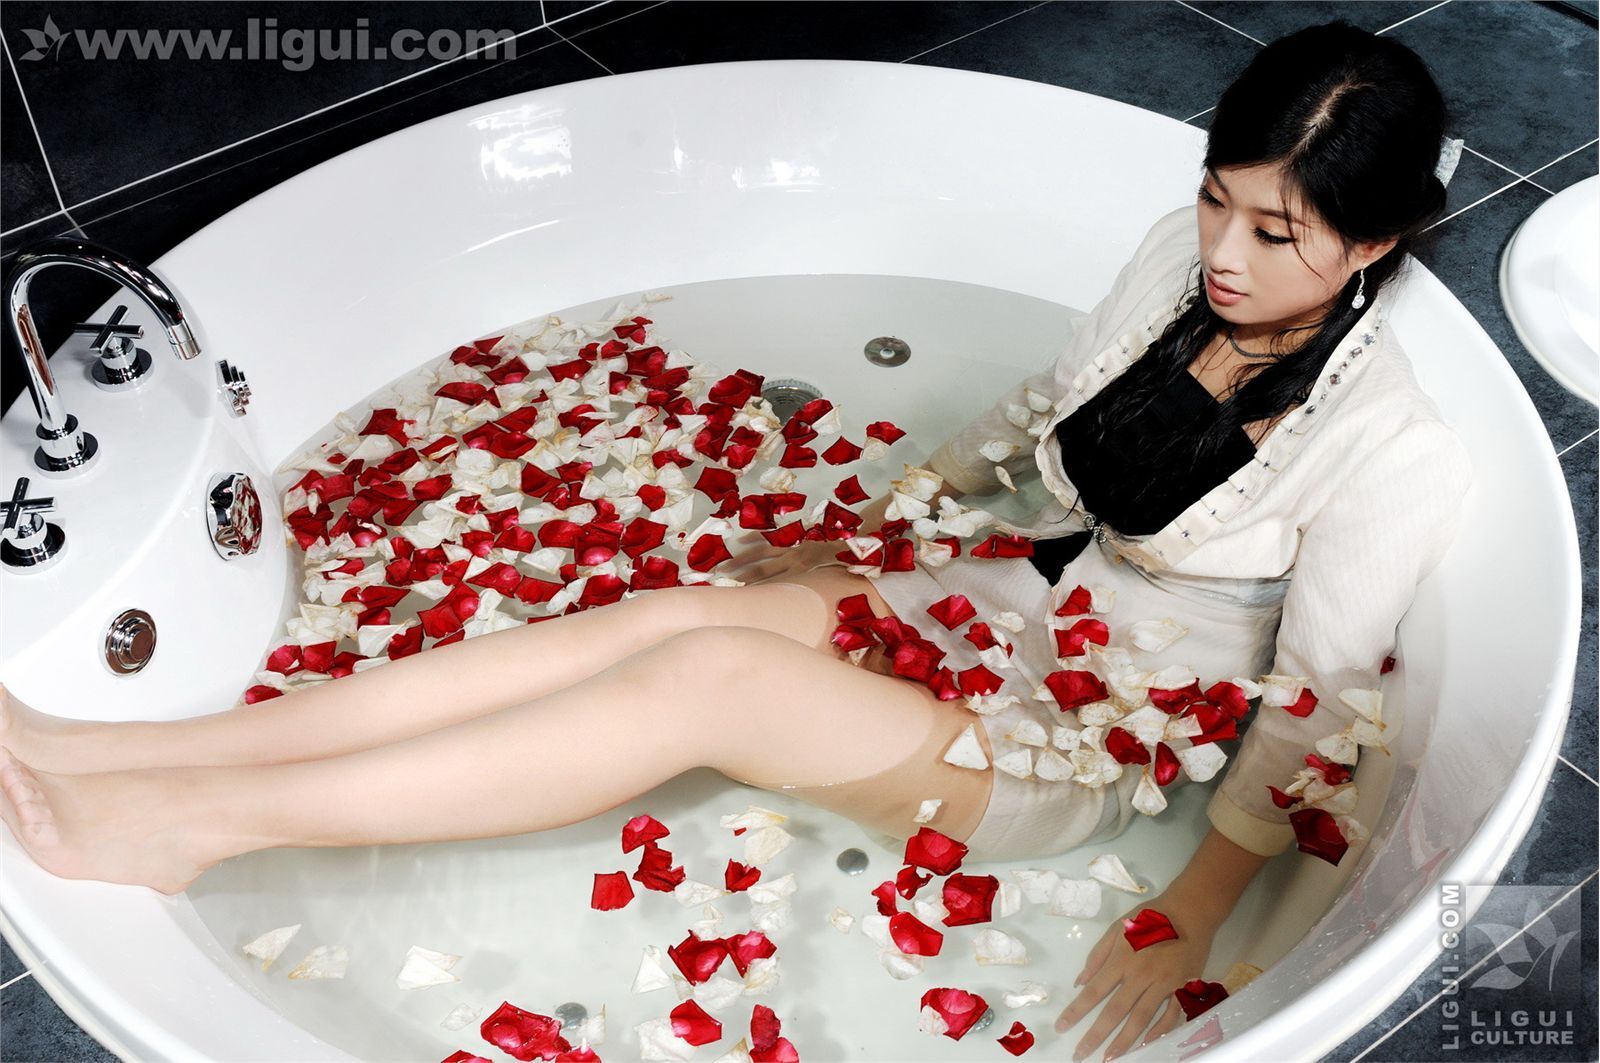 Lotus petal bath model siyuli cabinet